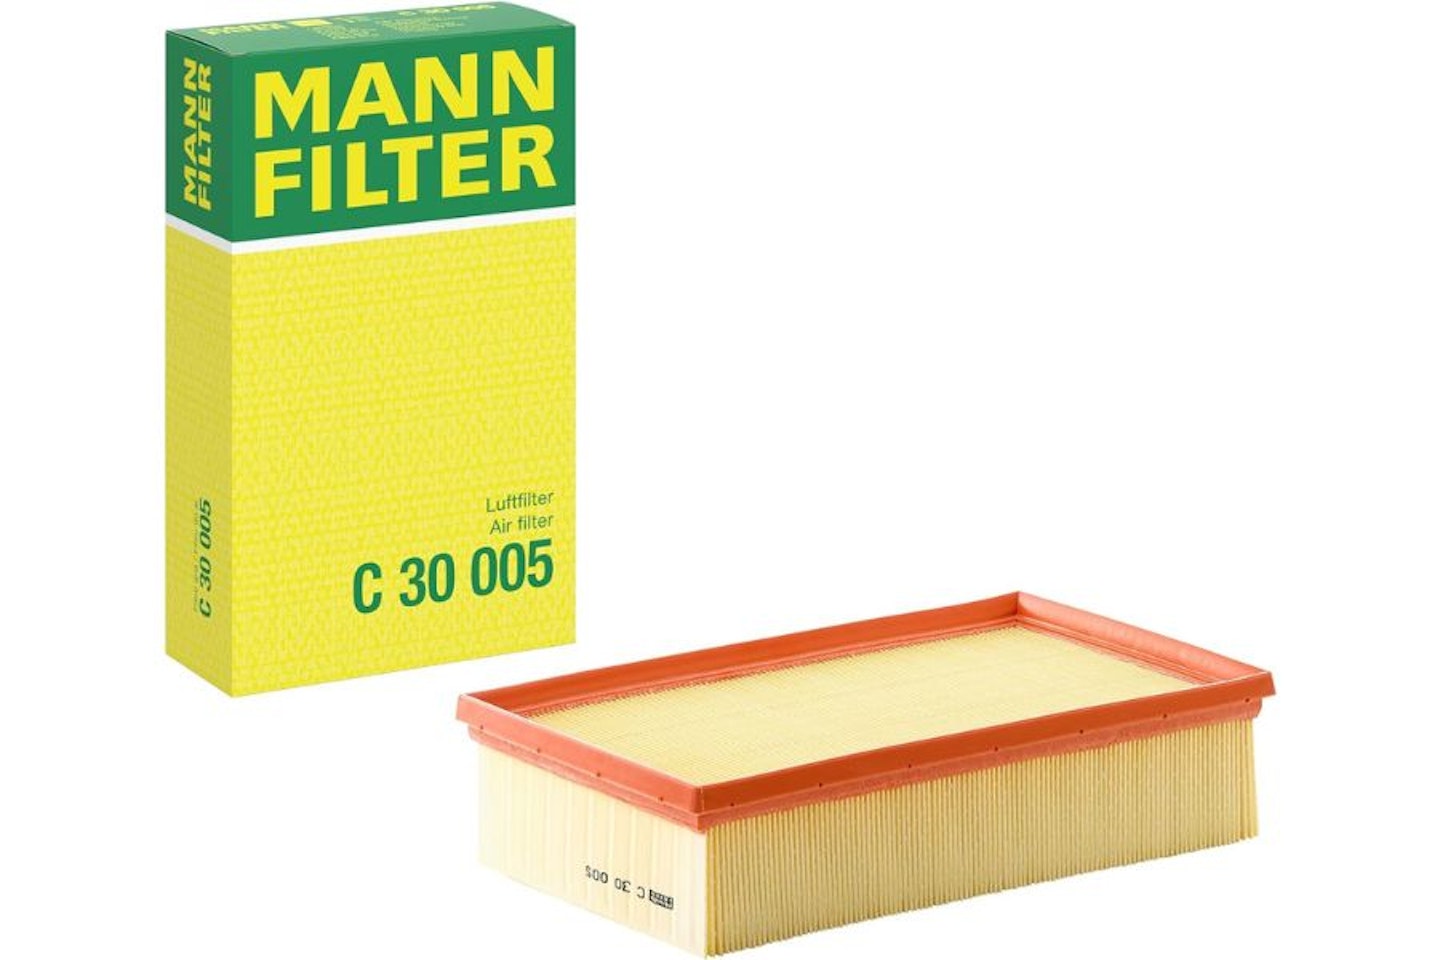 air filter guide